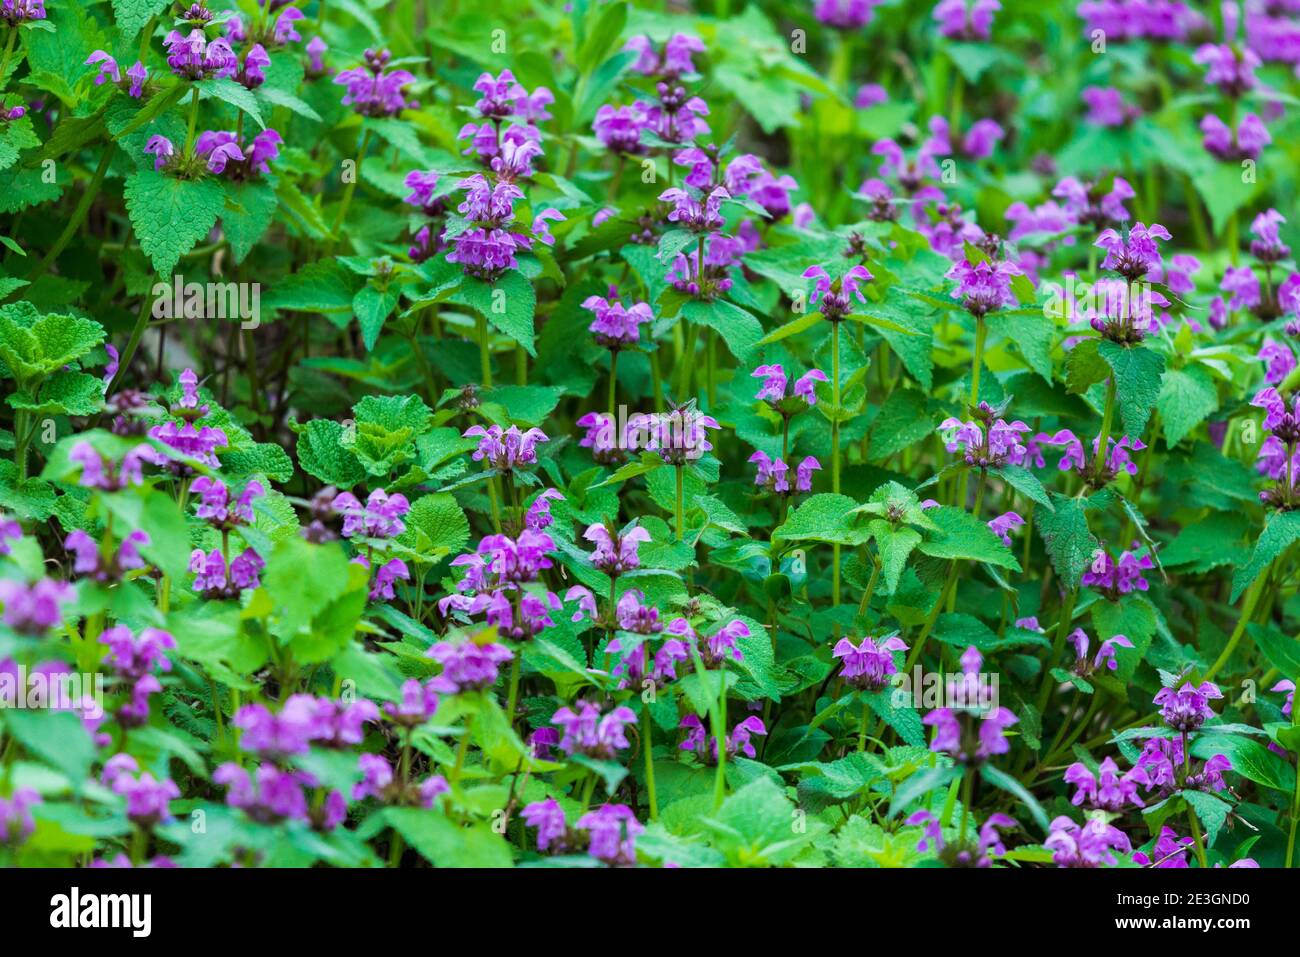 Purple flowers of Lamium Maculatum creeping groundcover plant. Stock Photo